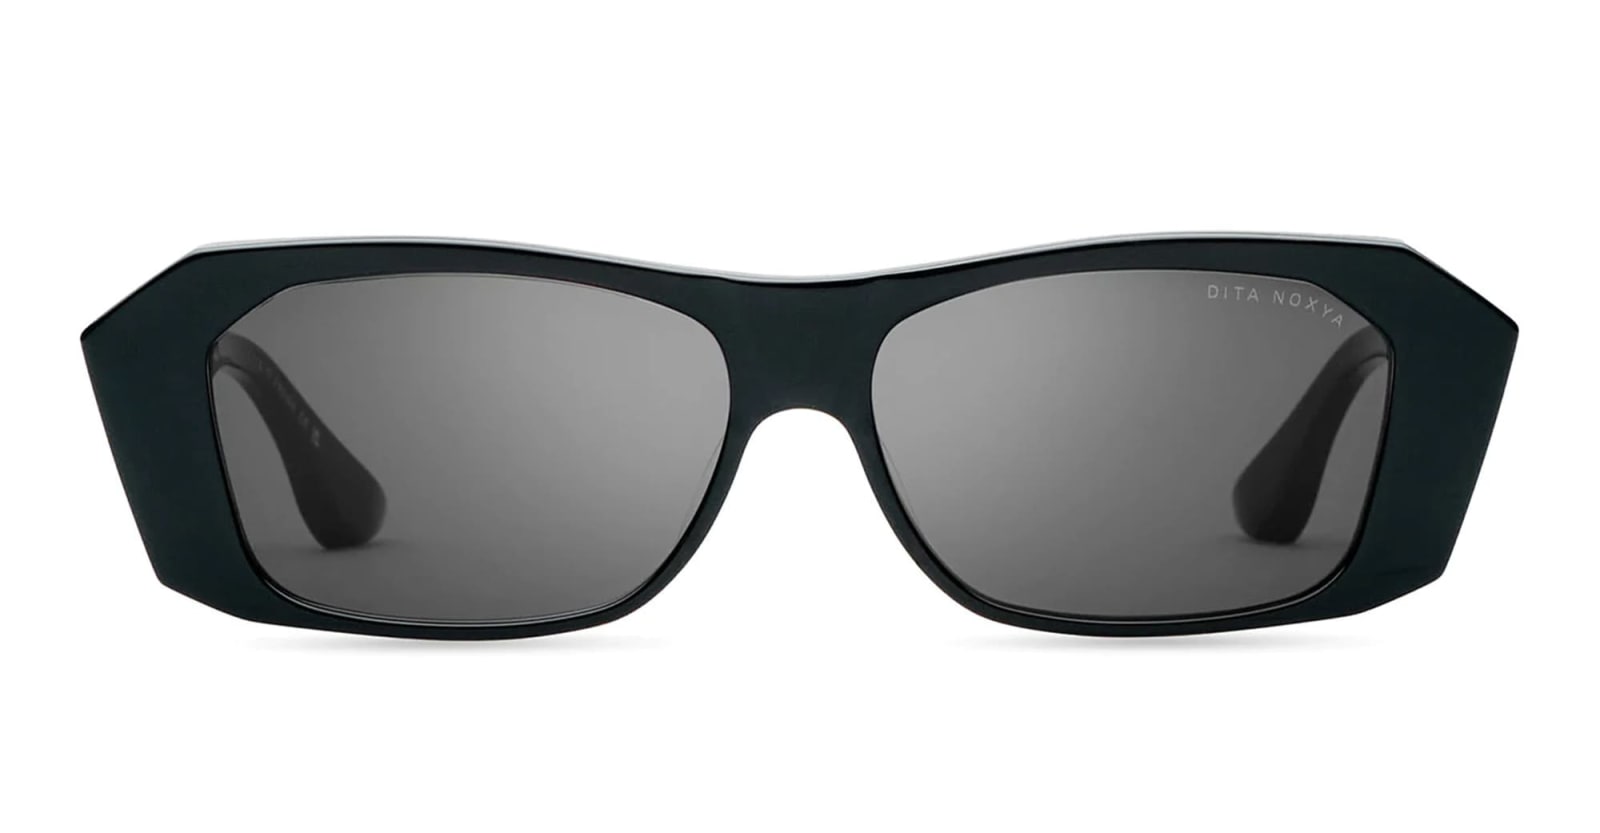 Noxya - Black Sunglasses